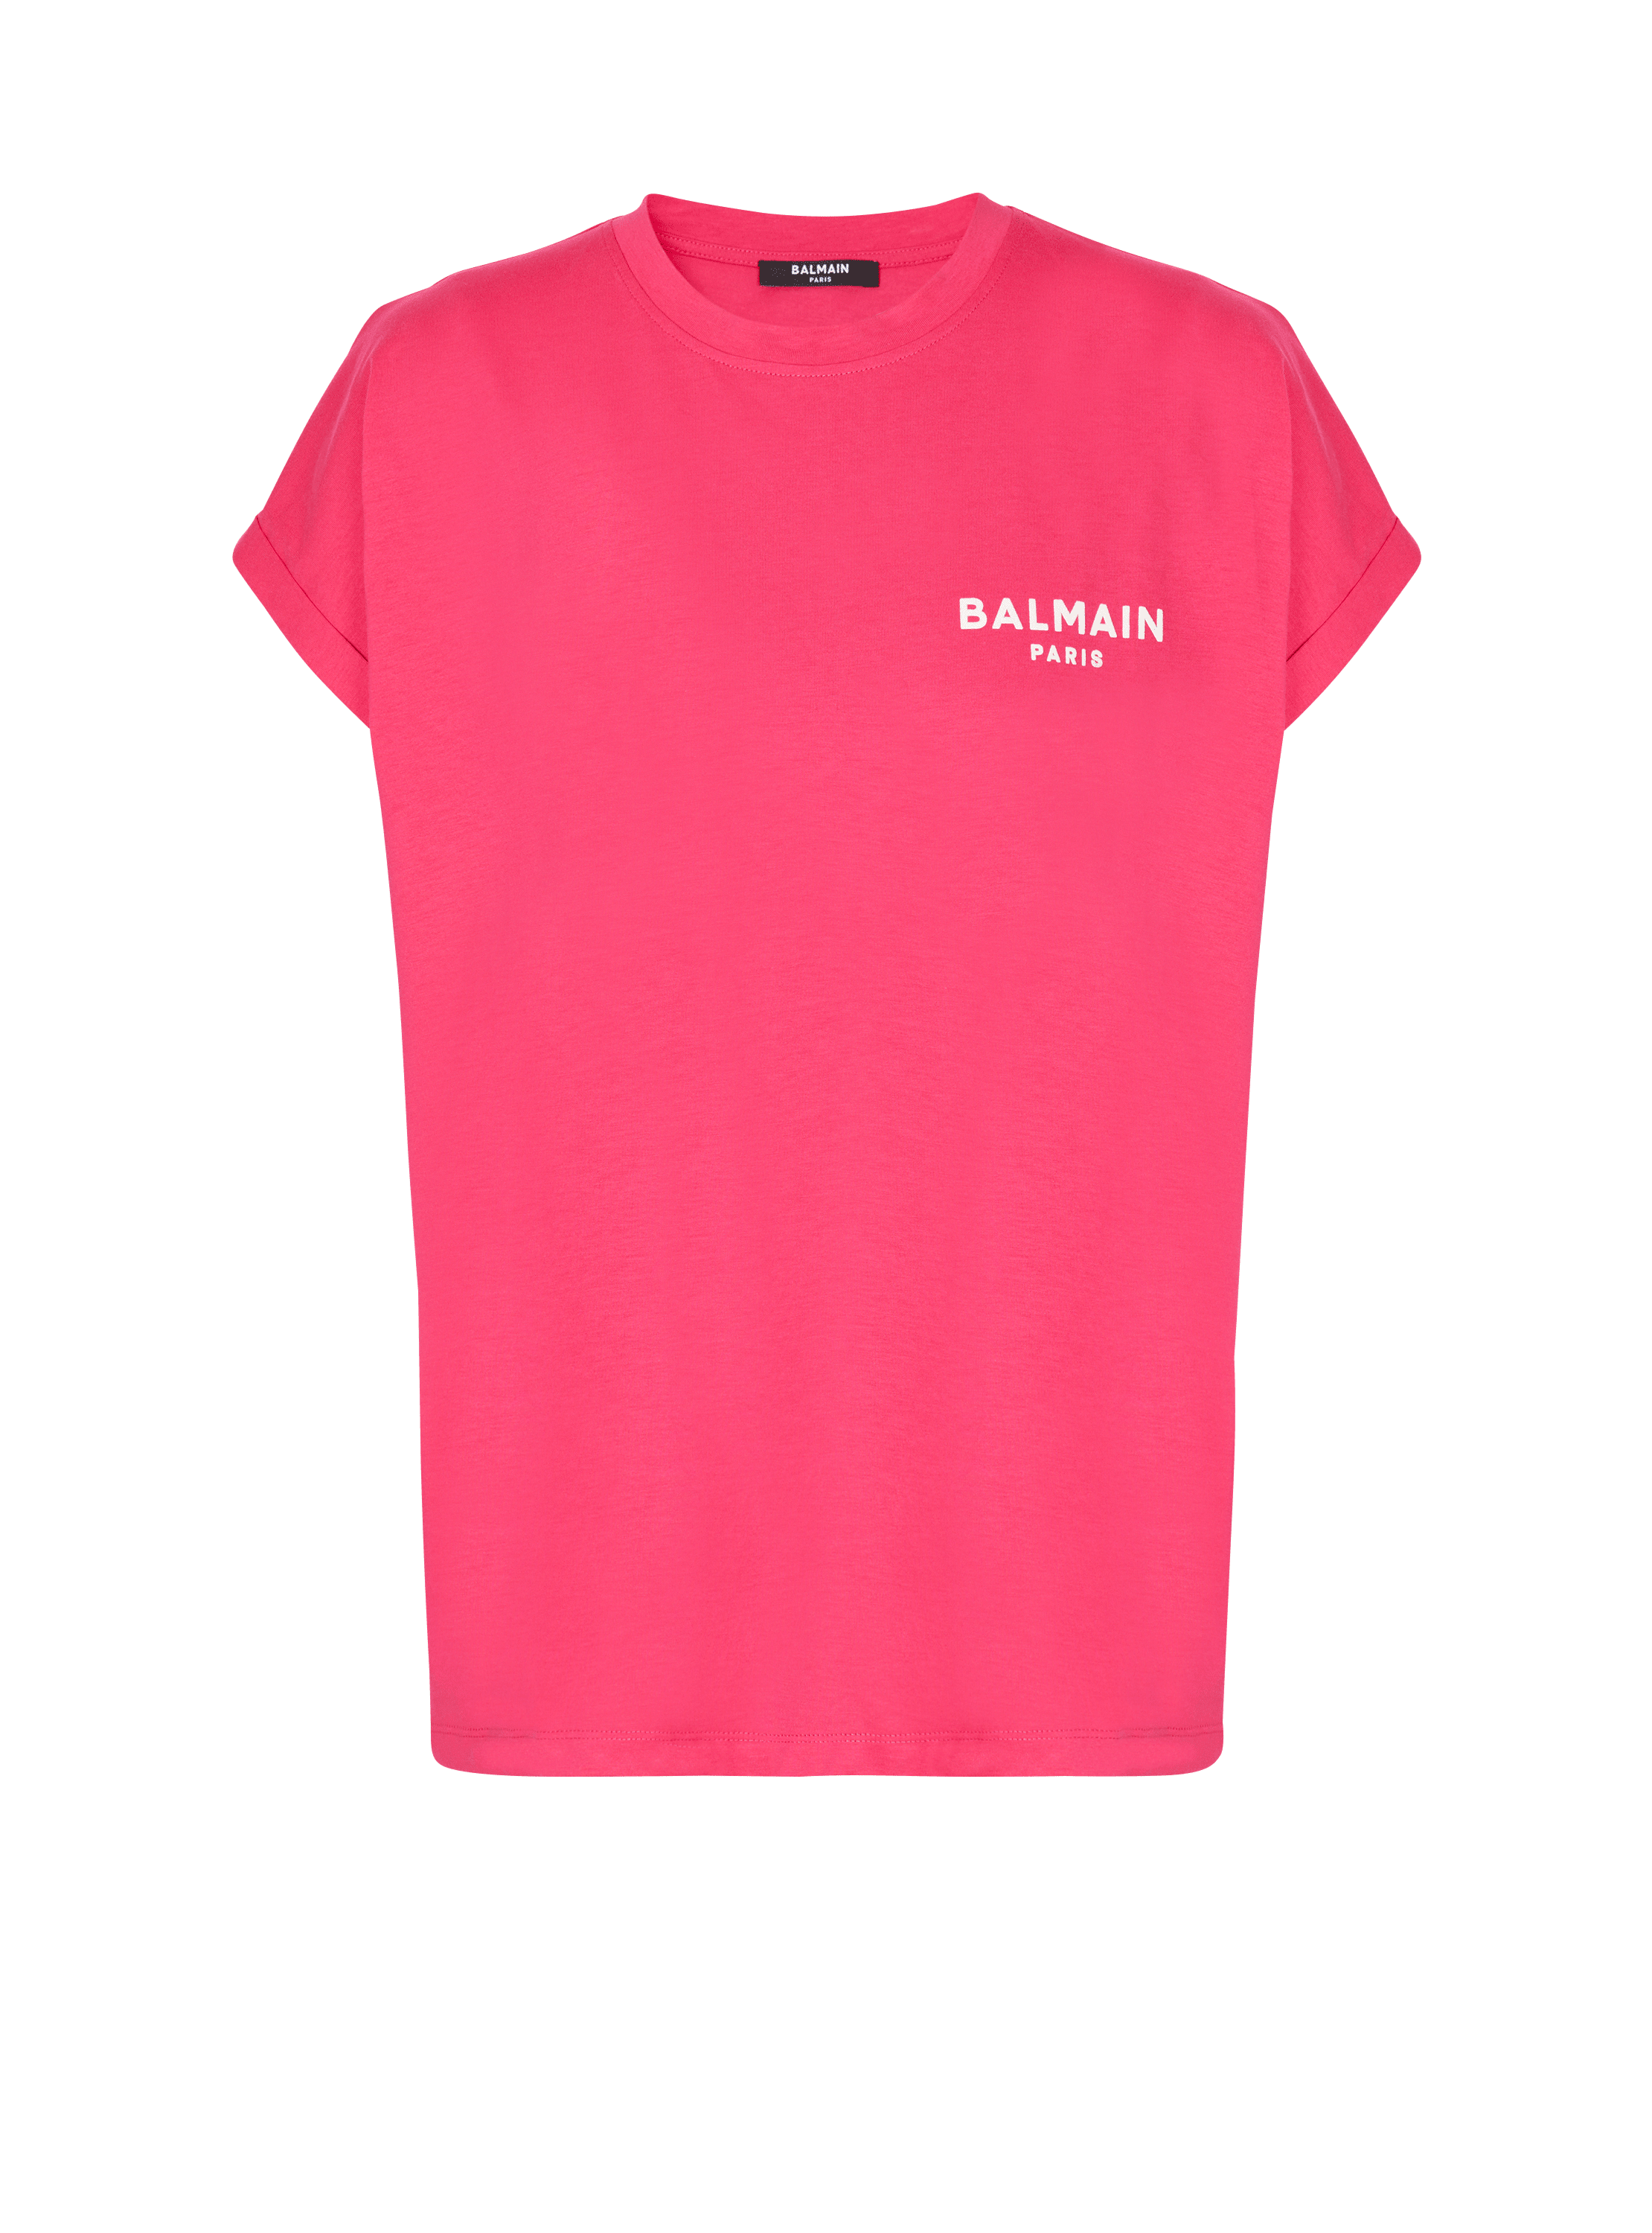 Beflocktes Balmain T-Shirt